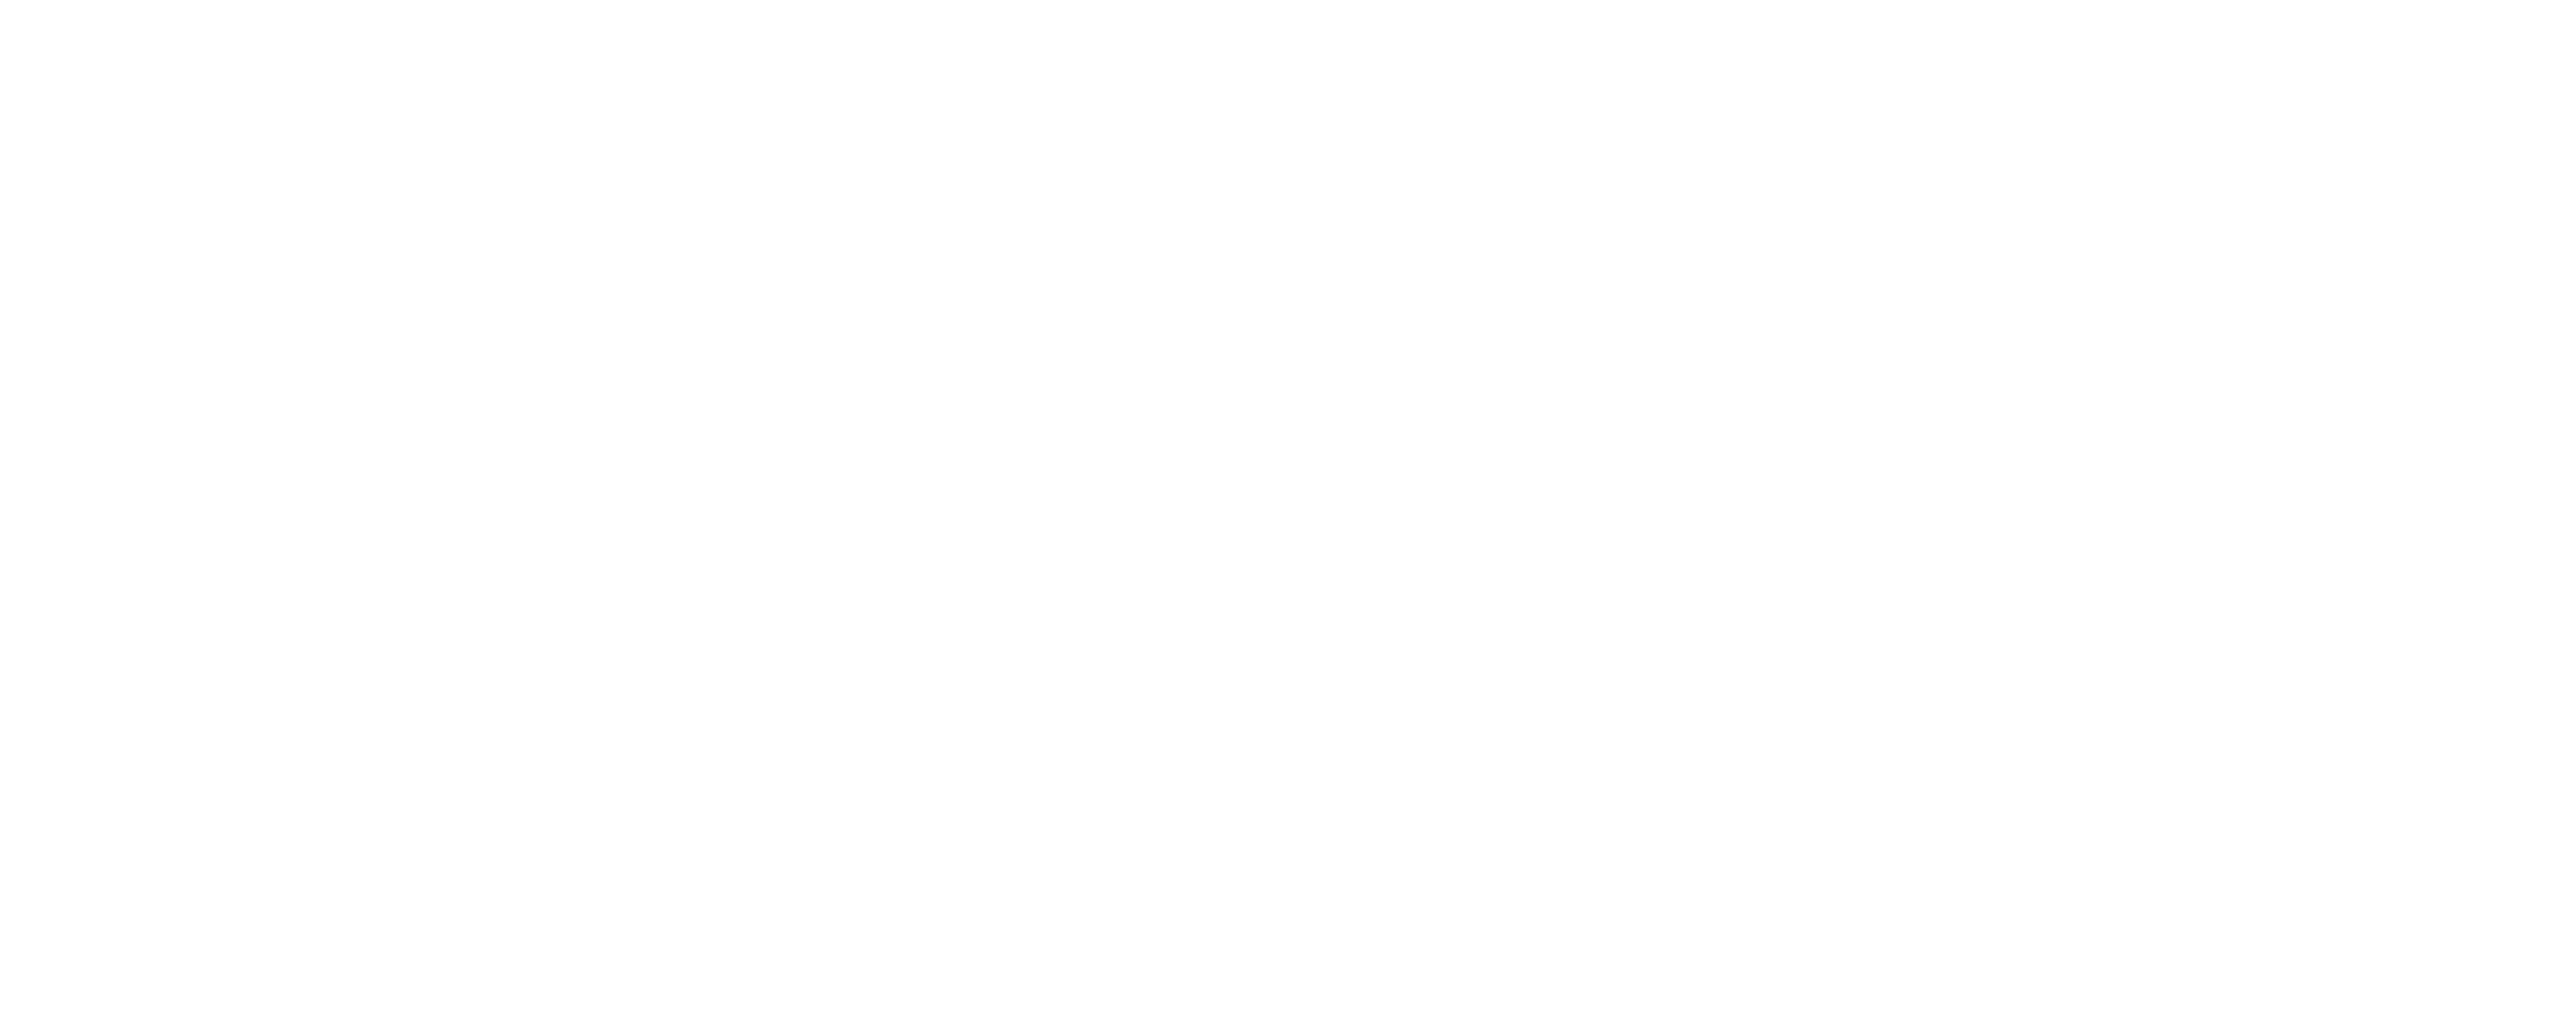 Silver Spoons logo